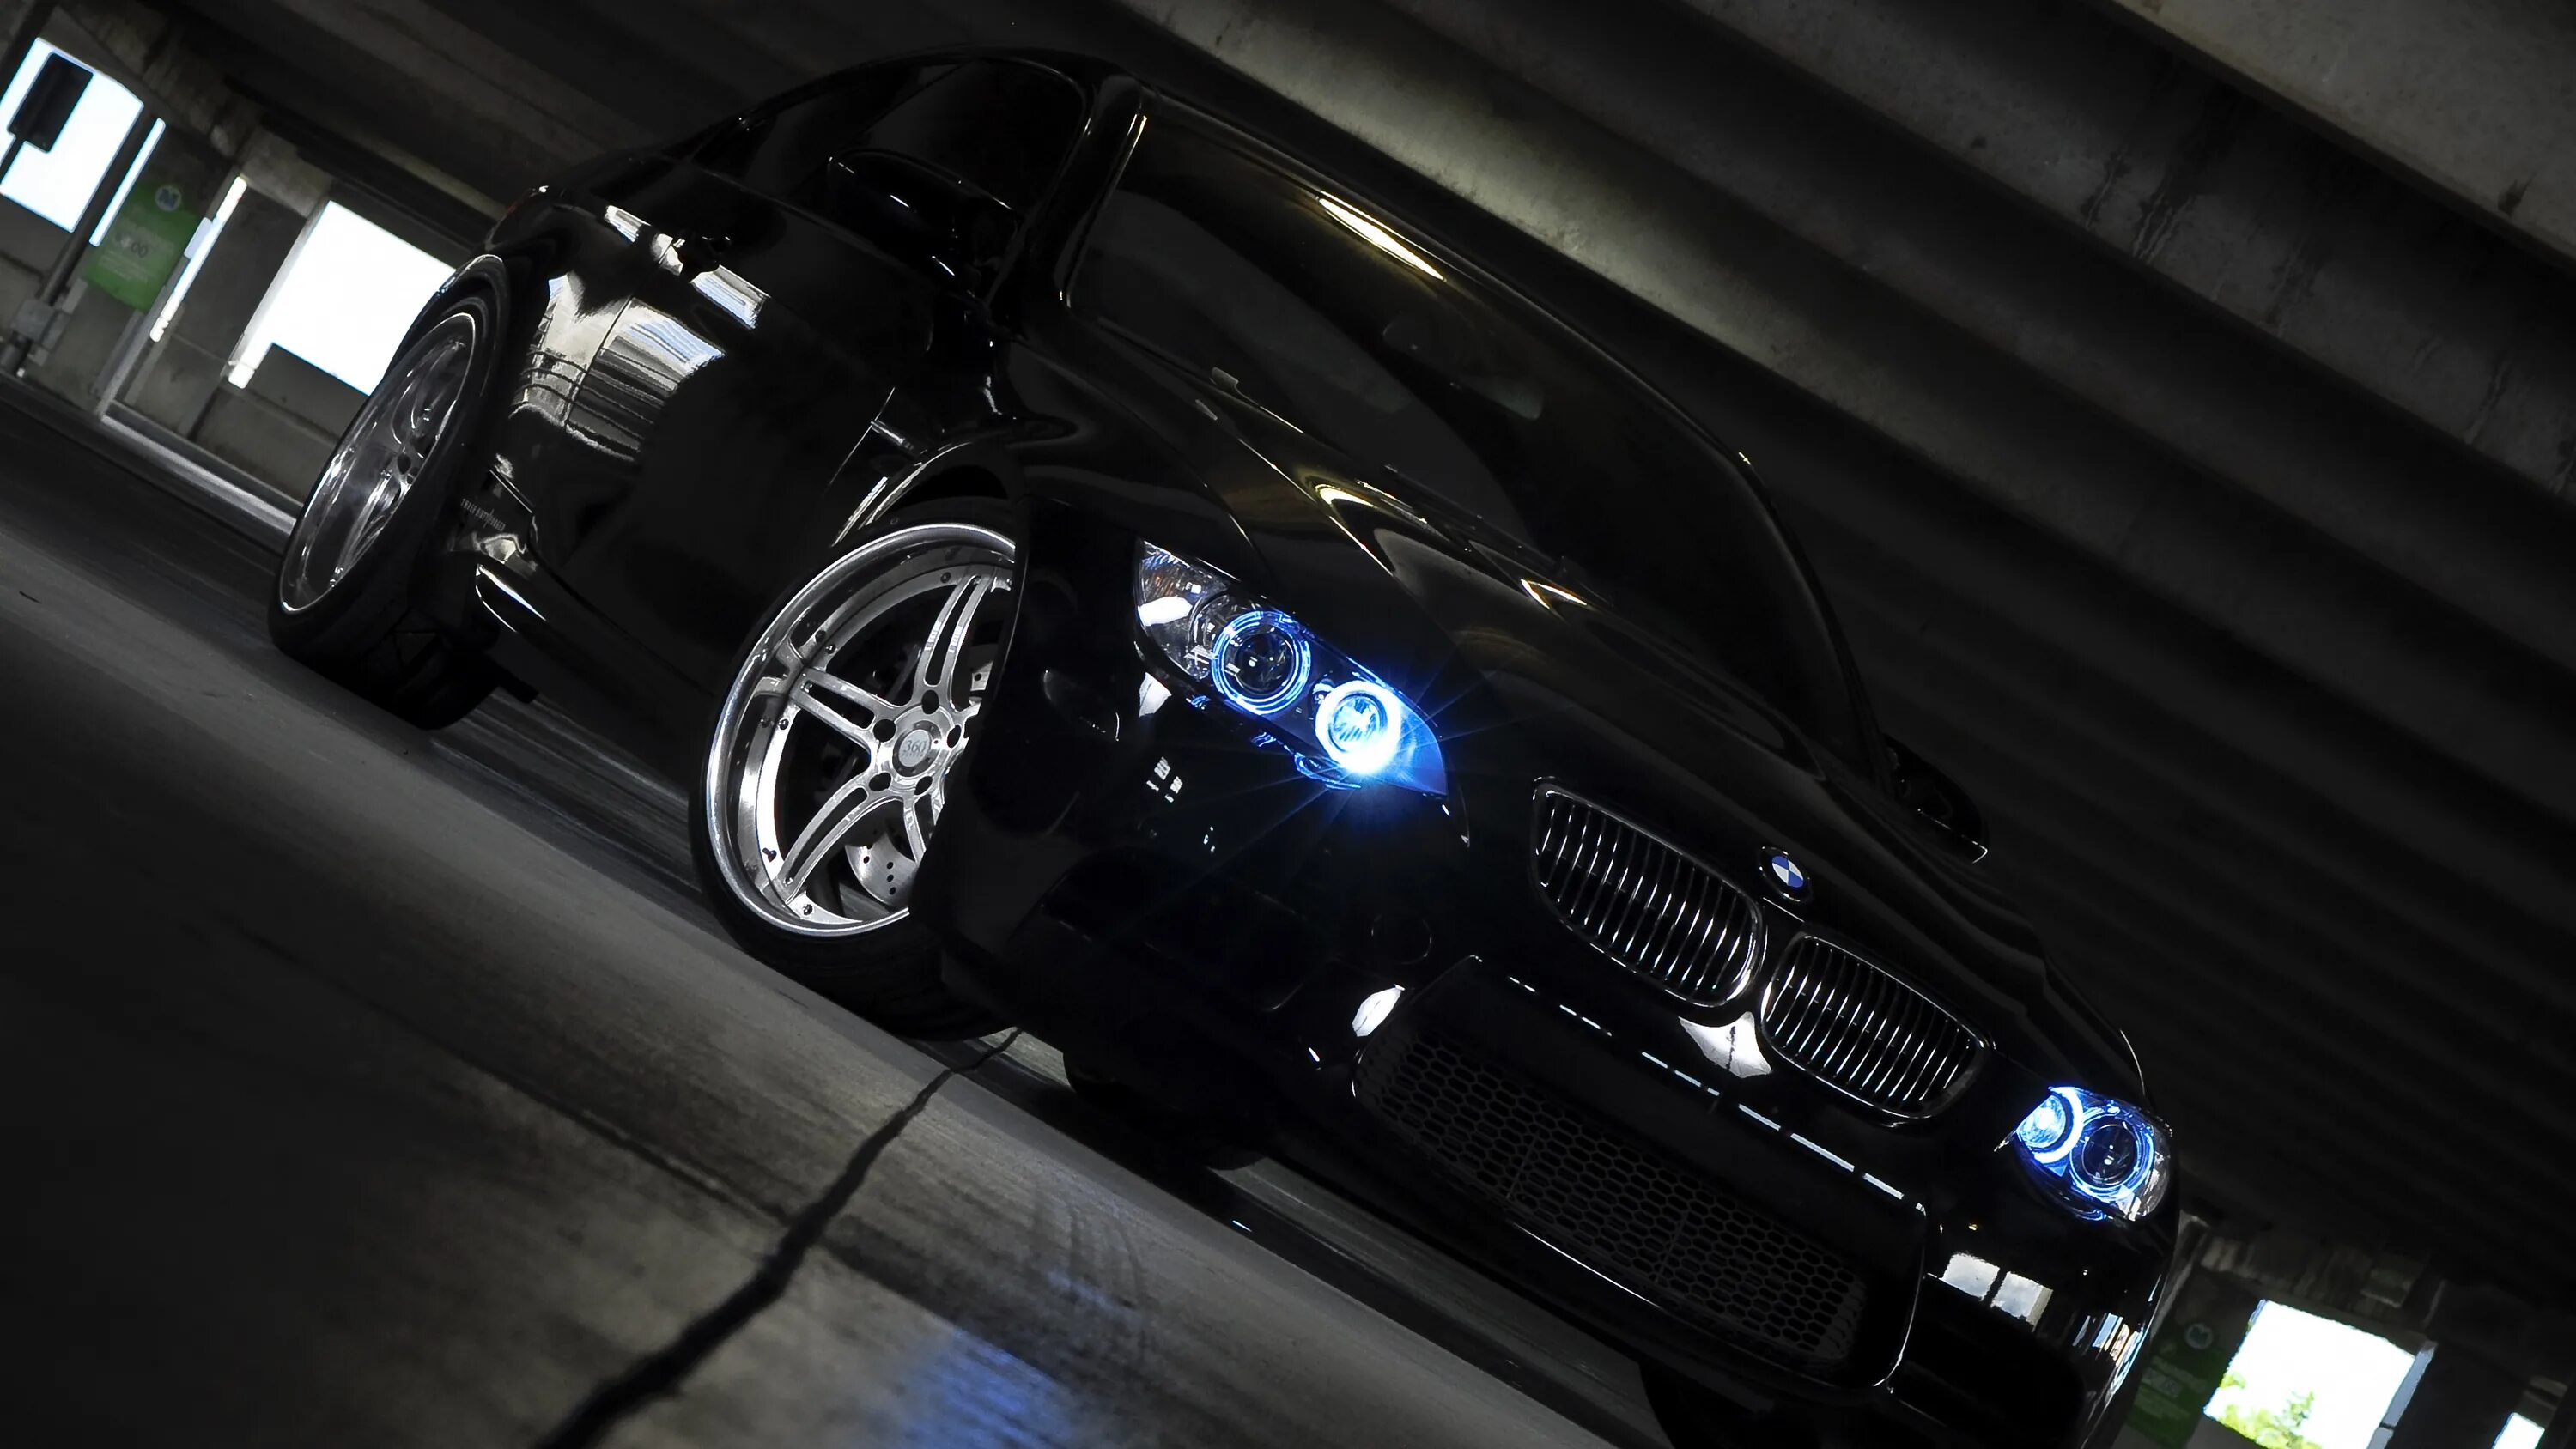 Черная машина перед. БМВ м3 черная. BMW m3 в темноте. БМВ м5 черная на парковке.